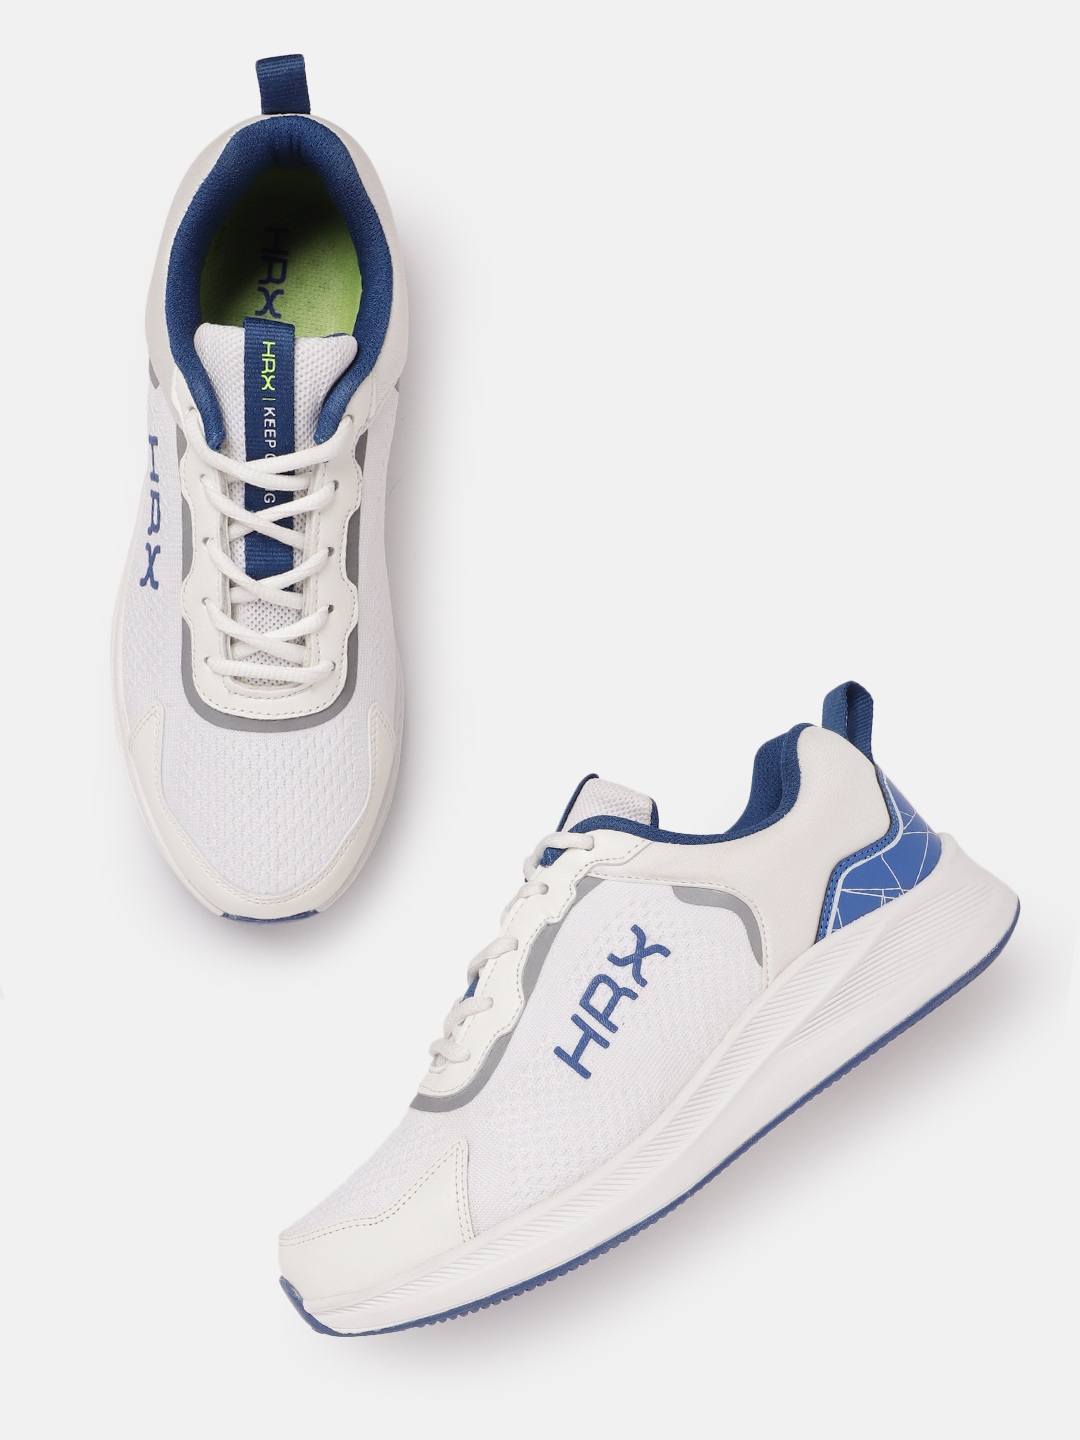 Hrx By Hrithik Roshan White Sports Shoes - Buy Hrx By Hrithik Roshan White  Sports Shoes online in India